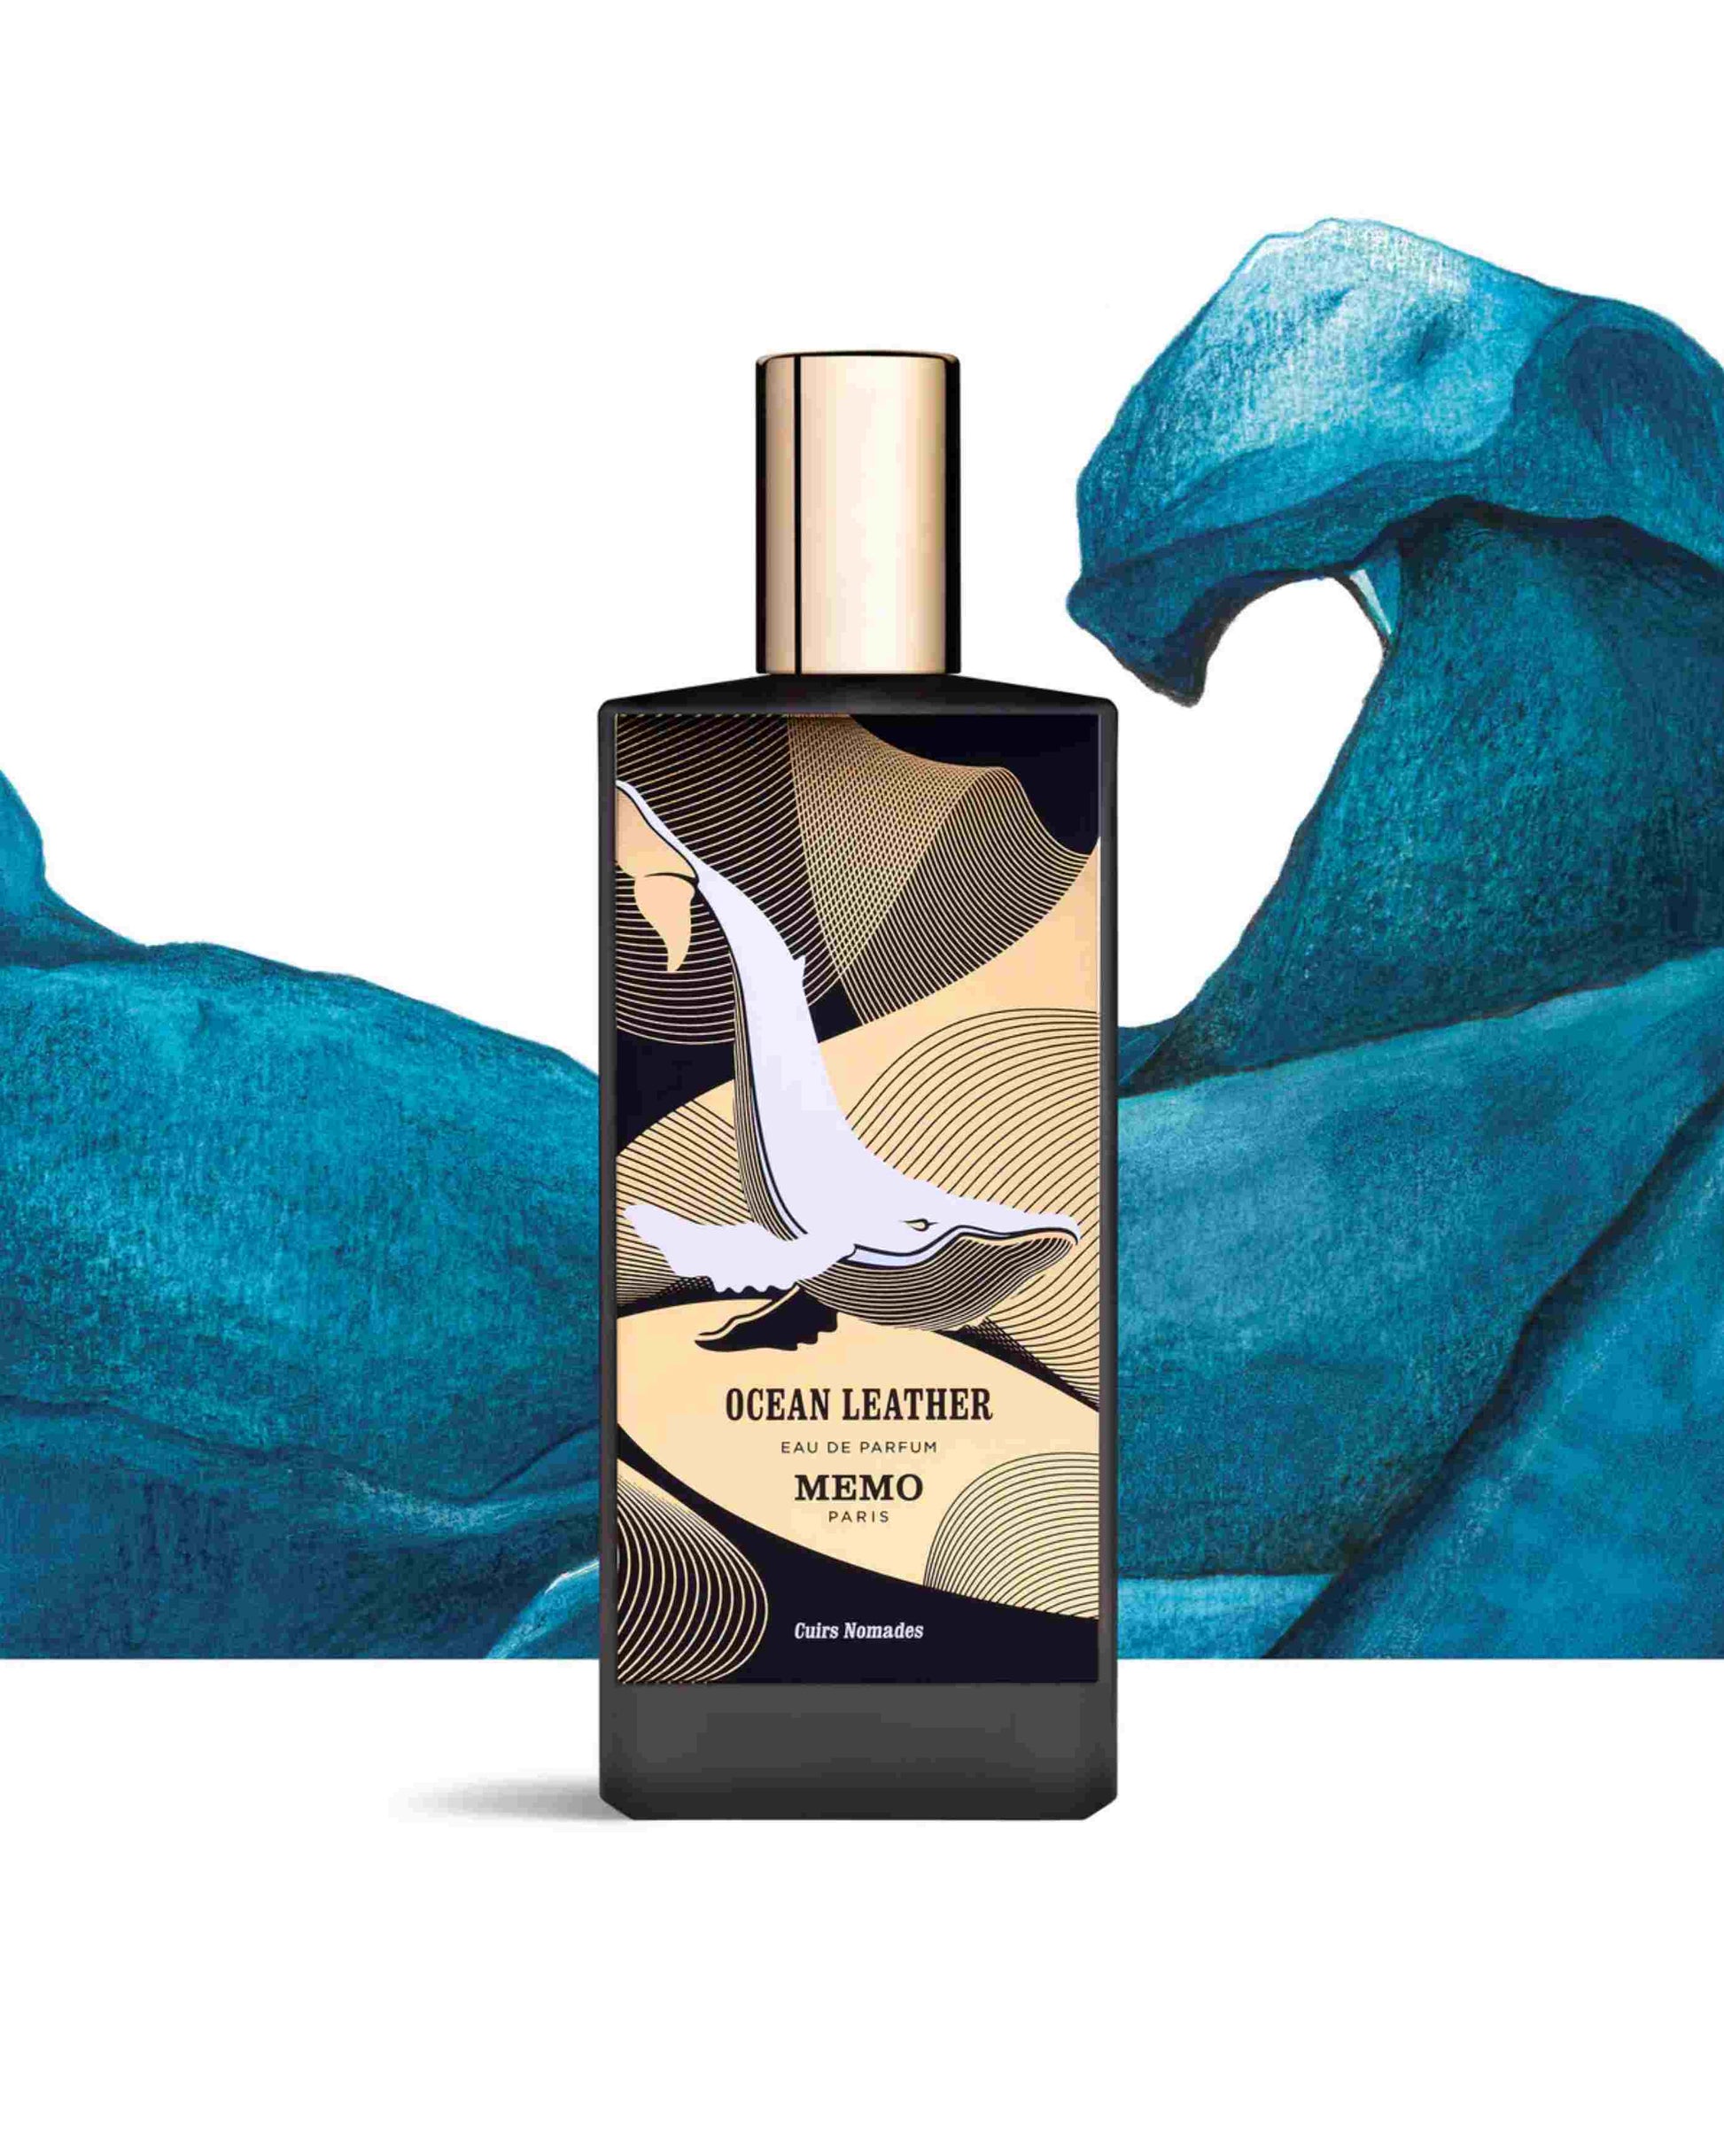 OCEAN LEATHER–MEMO Paris EDP–foryou–prix de foryou parfumurie en ligne–vente de parfum original au Maroc–prix de foryou parfum